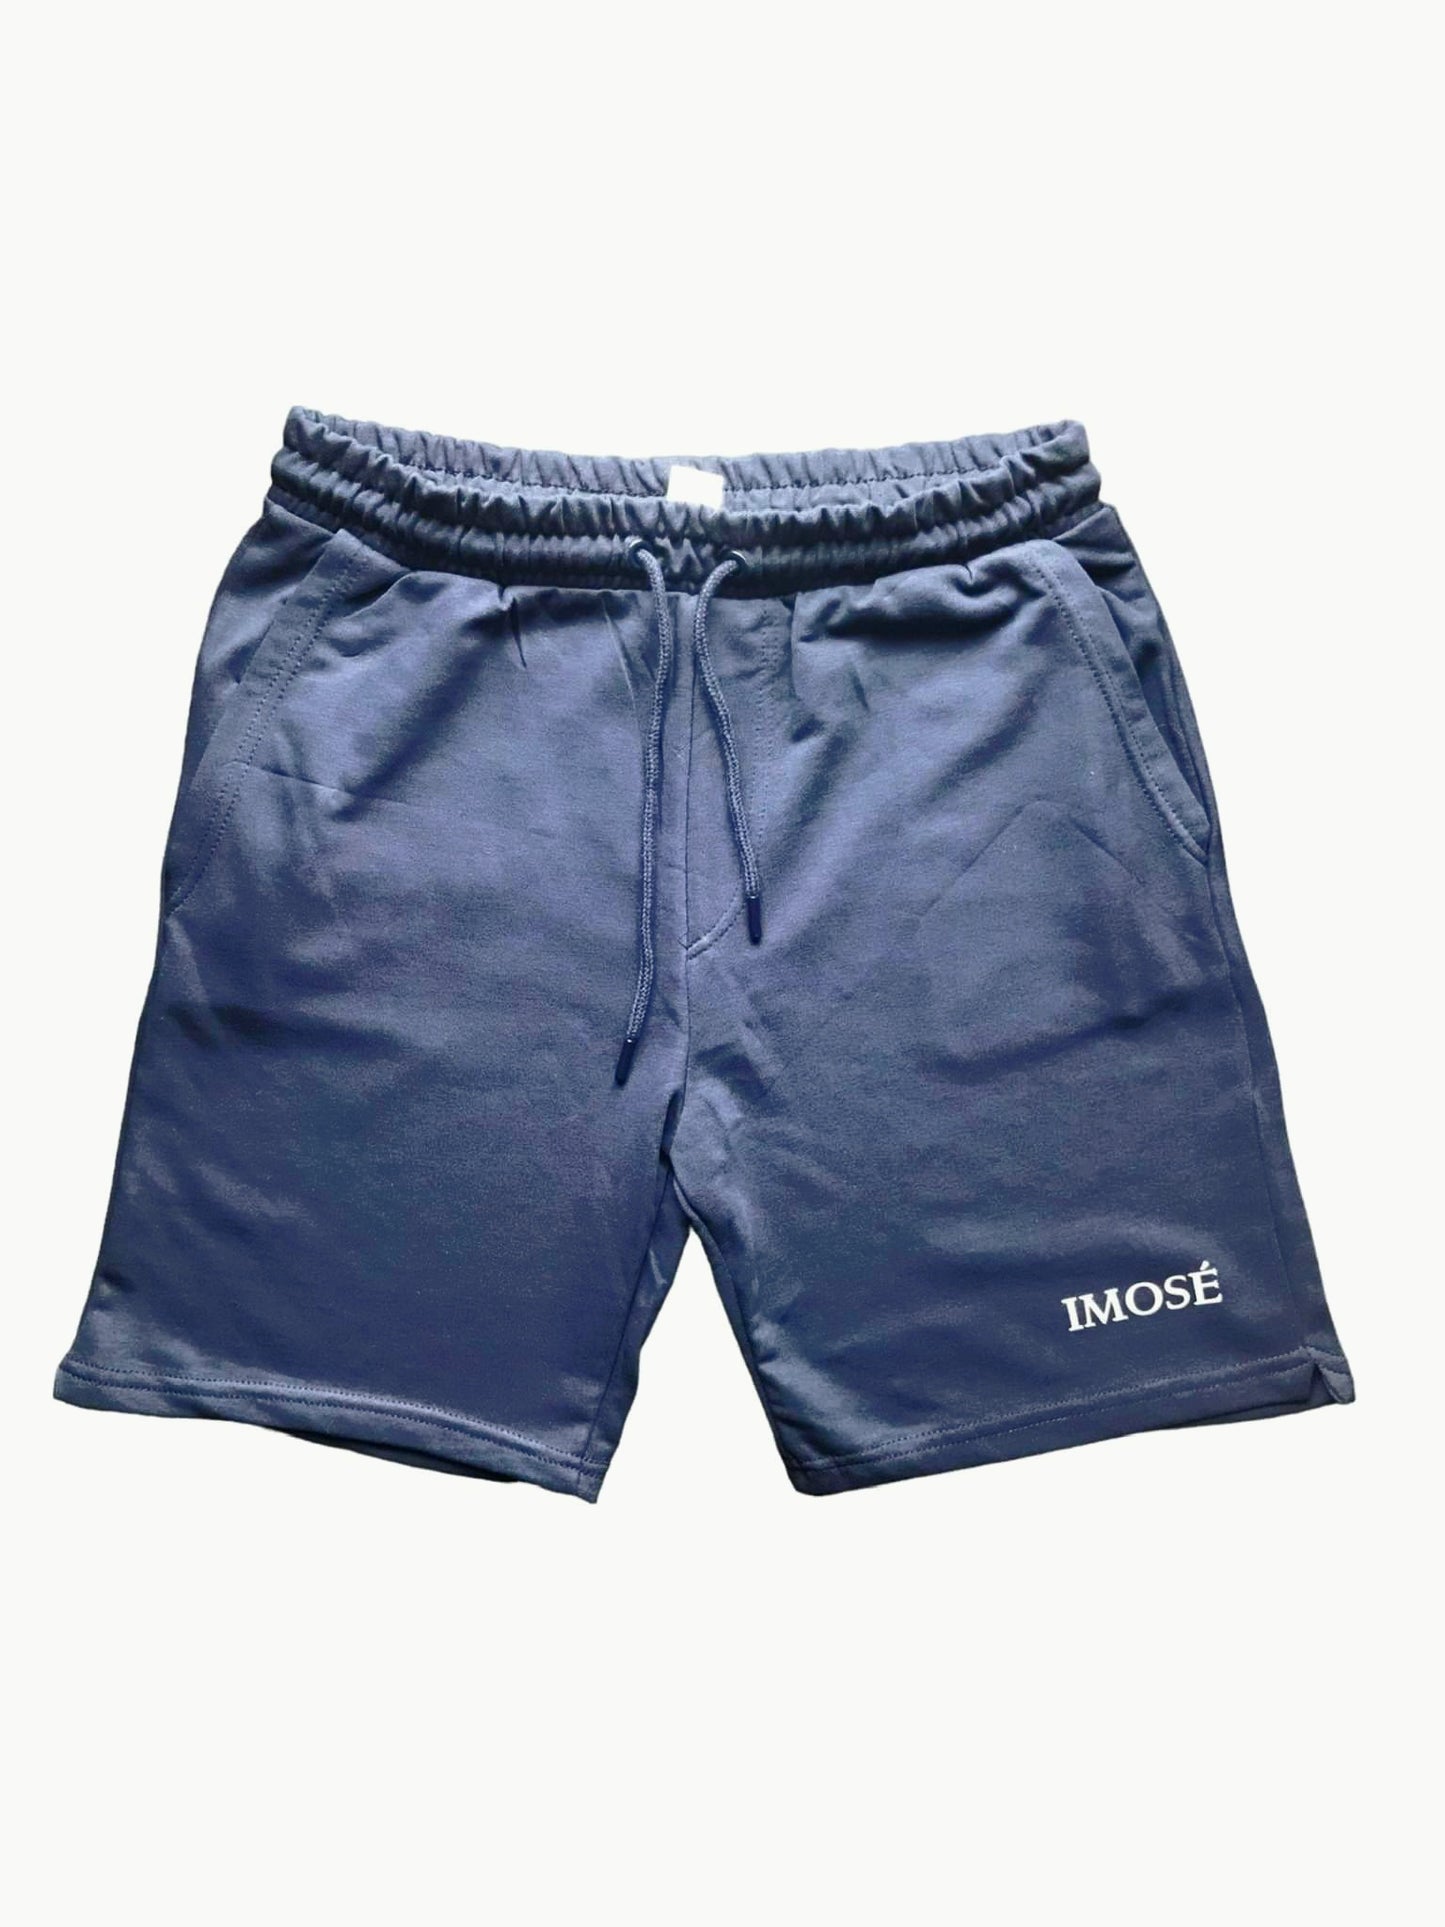 IMOSÉ Branded (Navy Blue) Shorts